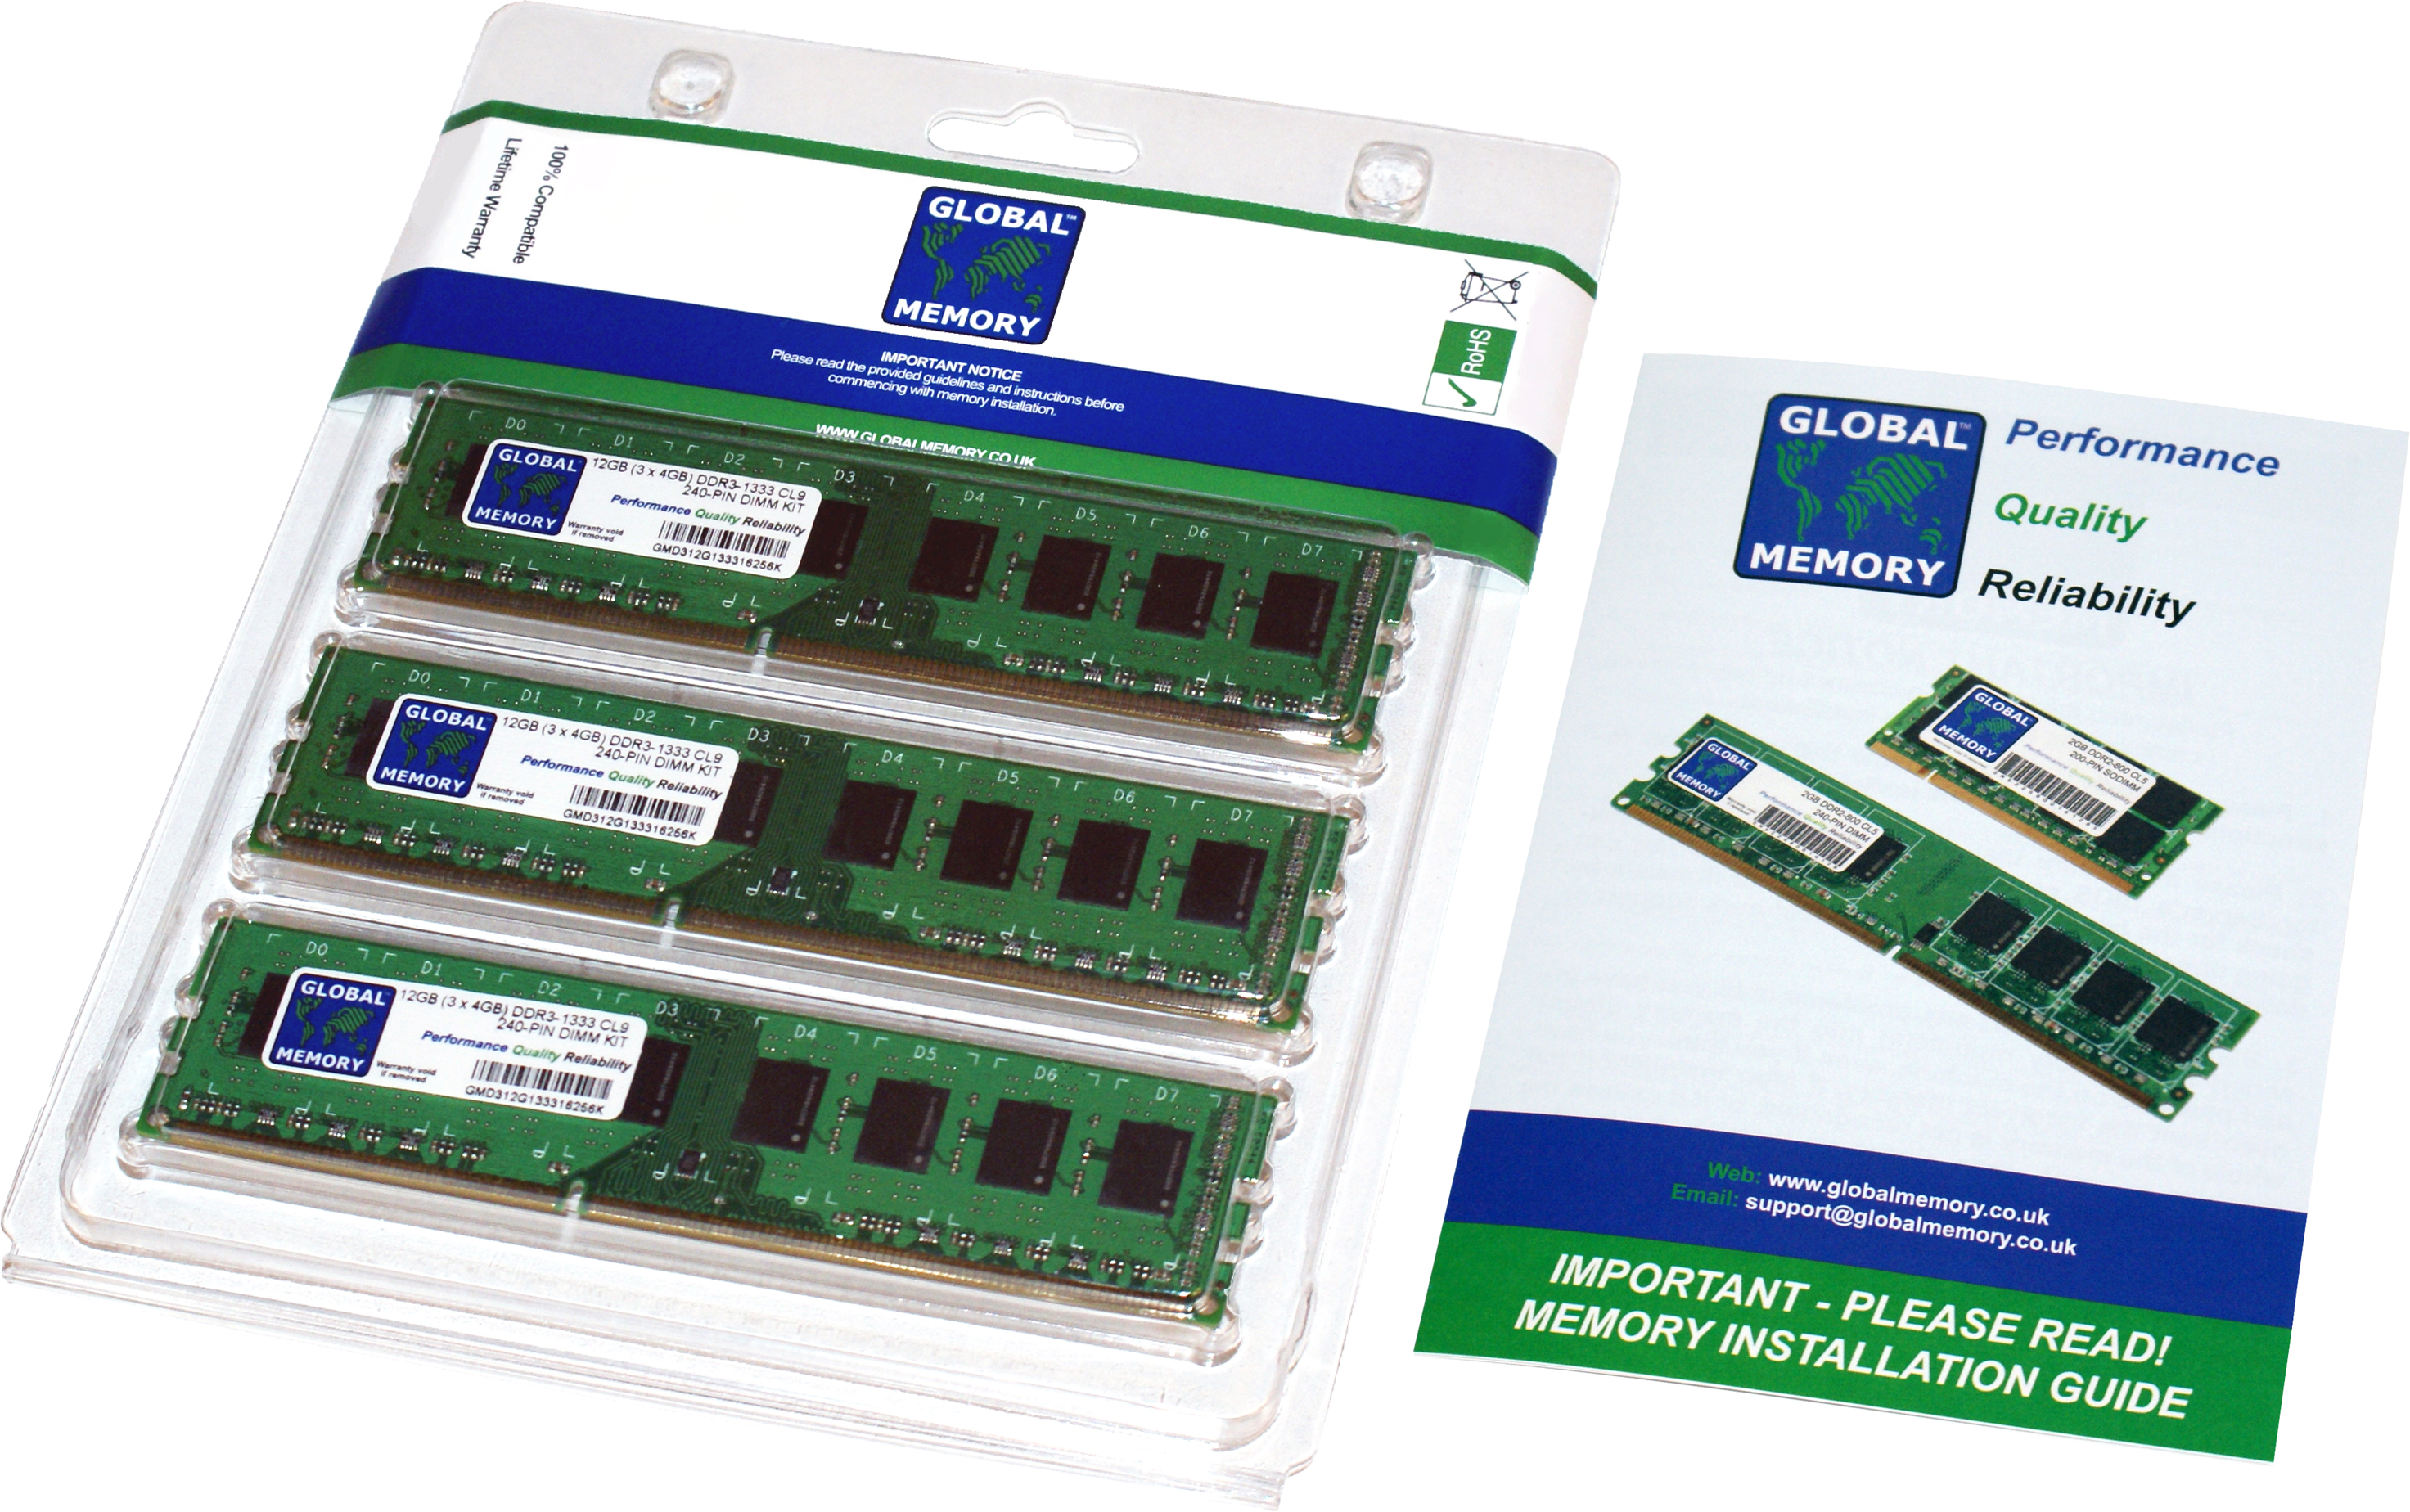 24GB (3 x 8GB) DDR3 1866MHz PC3-14900 240-PIN DIMM MEMORY RAM KIT FOR ACER DESKTOPS